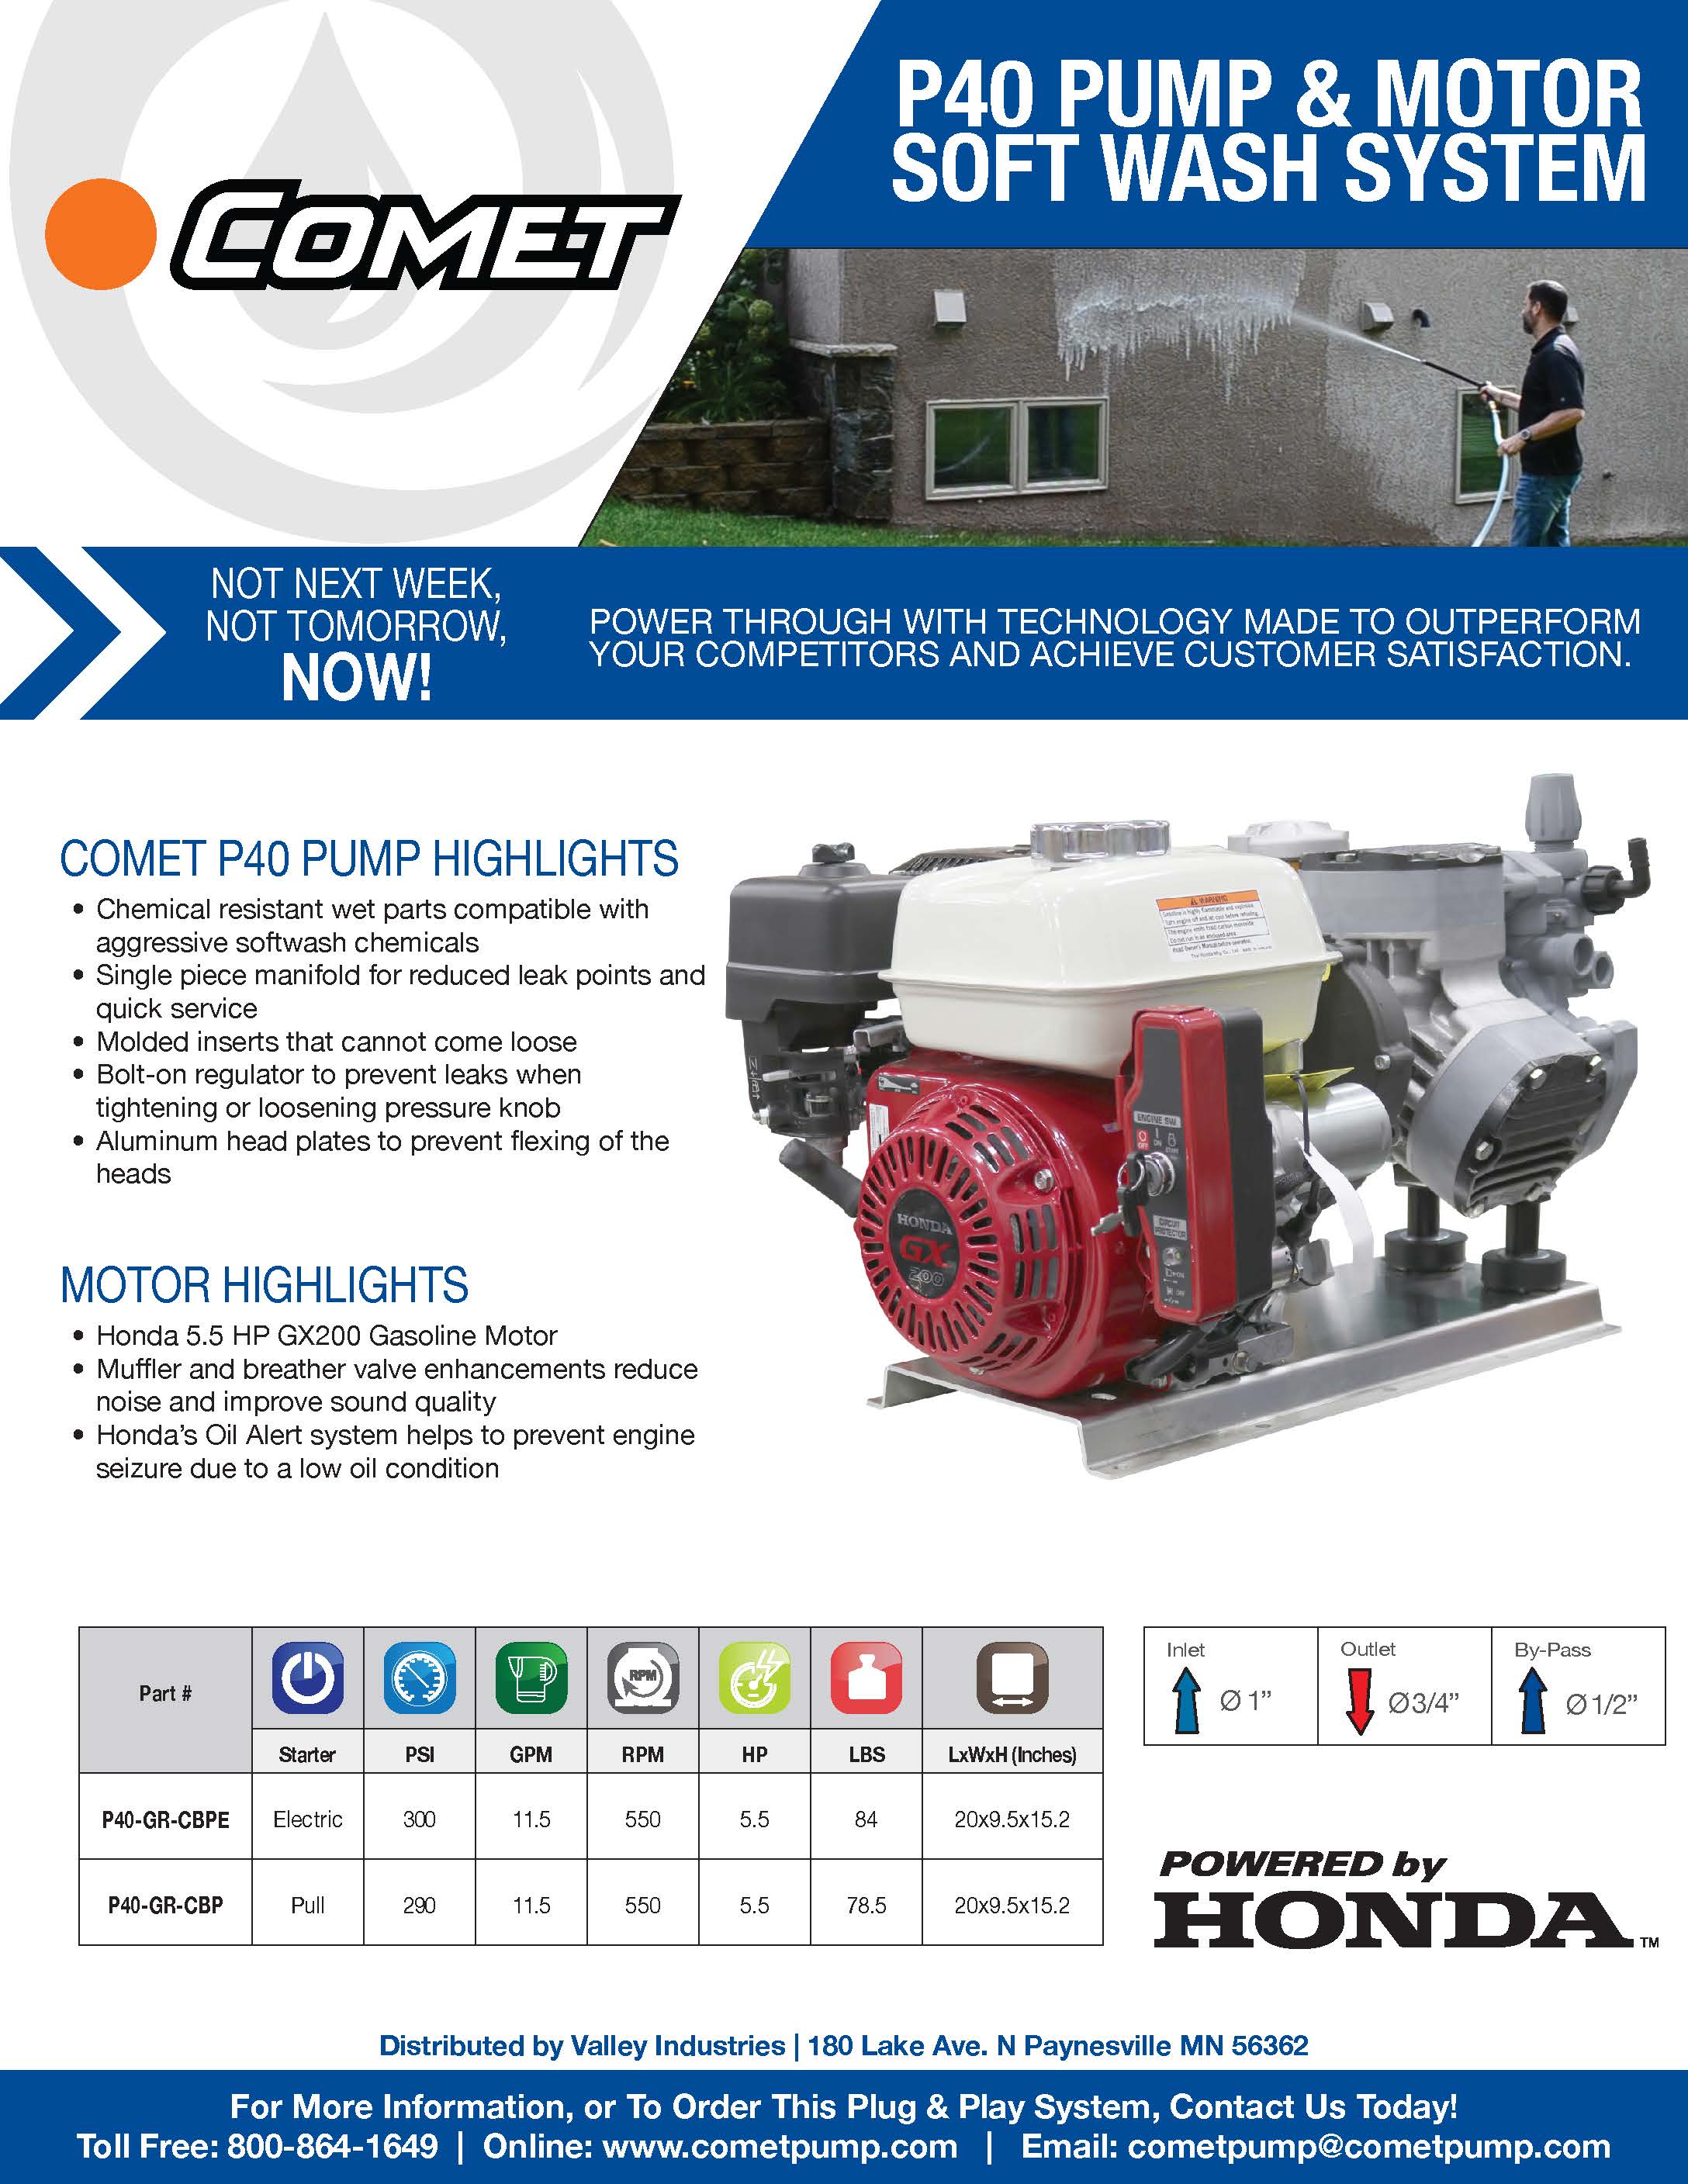 300 PSI @ 11.5 GMP, 550 RPM Honda GX200 w/Gear Reduction Comet Pump Soft Wash System (Electric Starter)